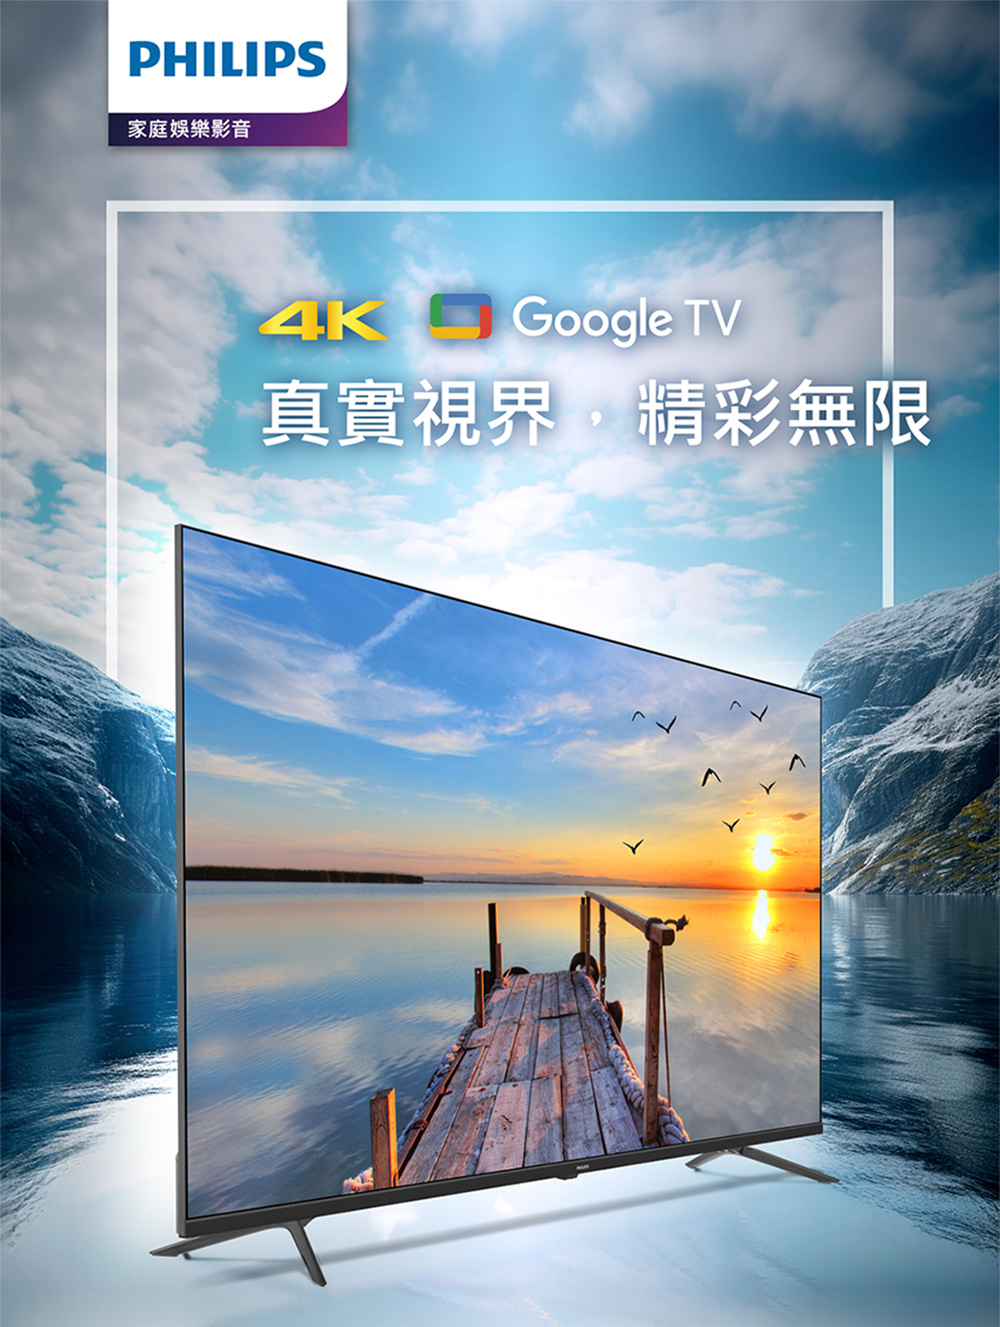 Philips 飛利浦 50型4K Google TV 智慧